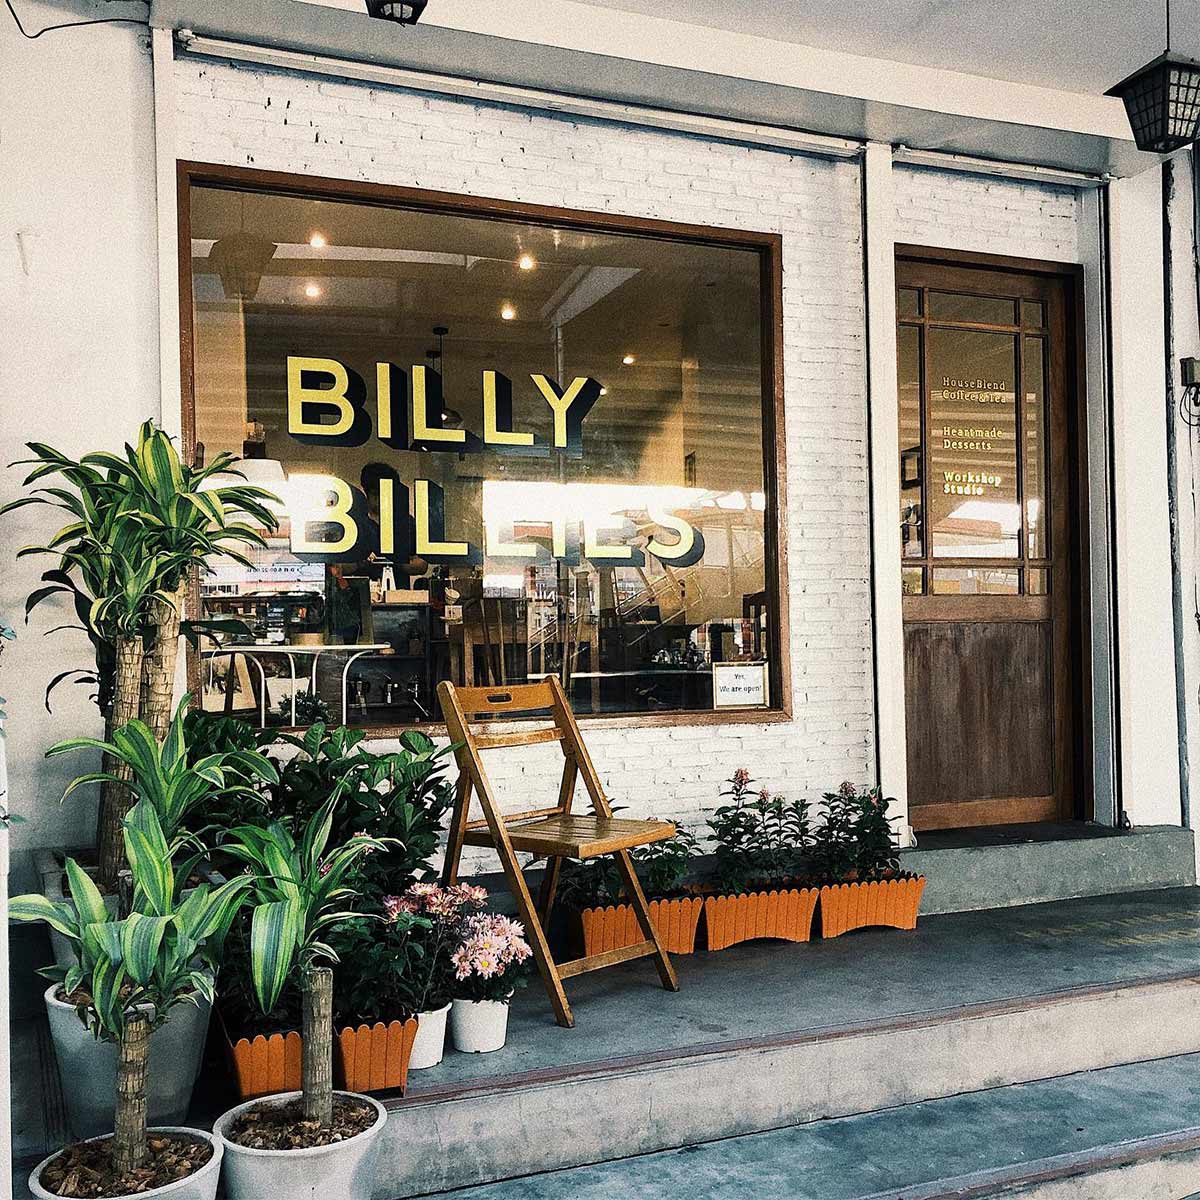 Billybillies - Cafe & Workshop Studio